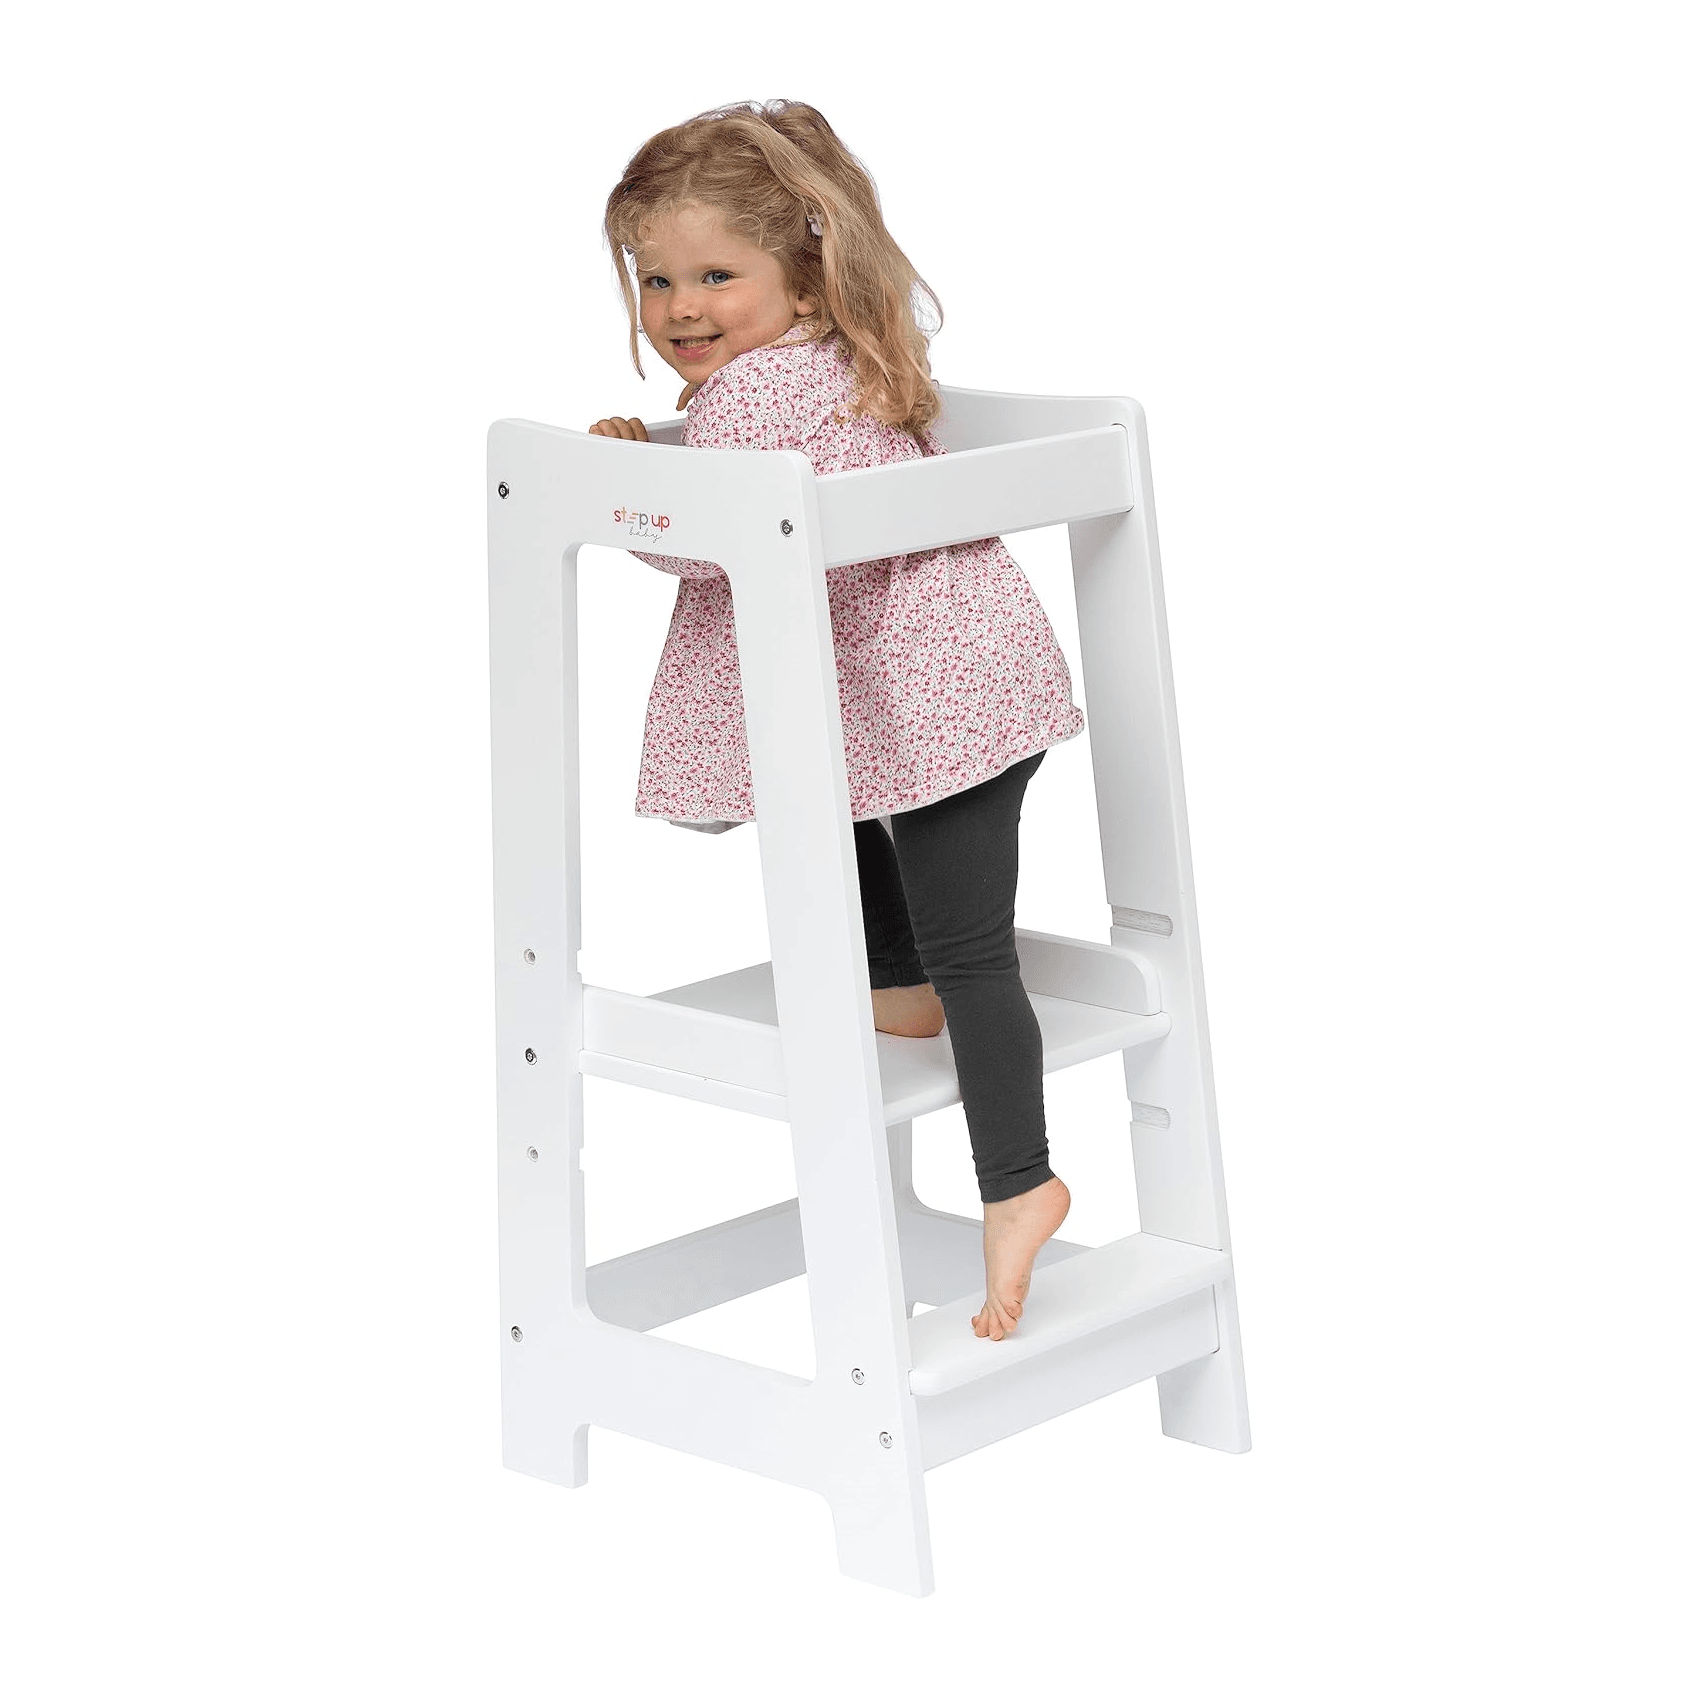 Montessori FUNLIO 3-Level Height Adjustable High Chair